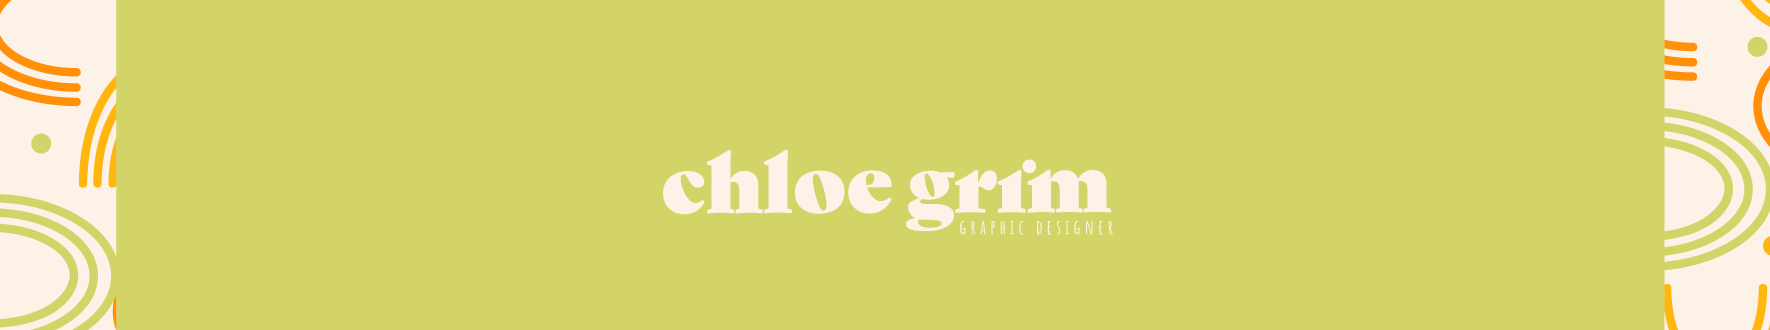 Banner de perfil de Chloe Grim